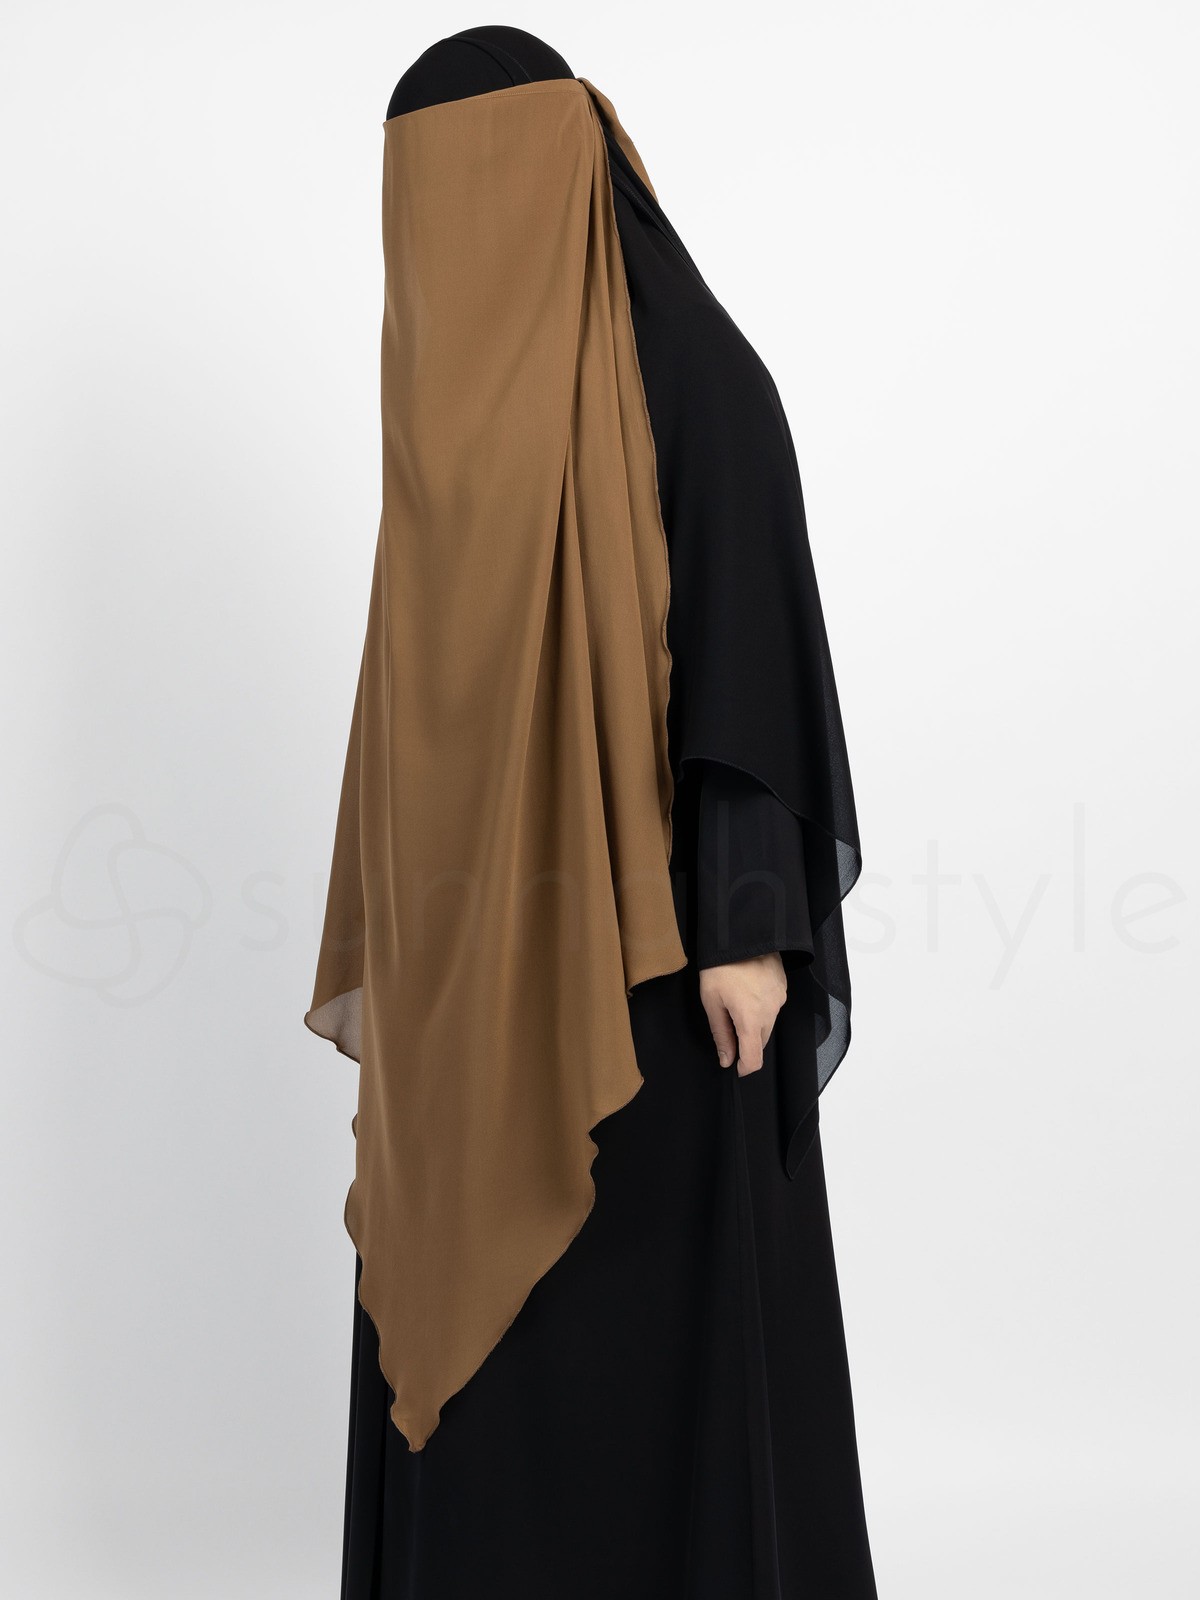 Sunnah Style - Extra Long Diamond Niqab (Caramel)